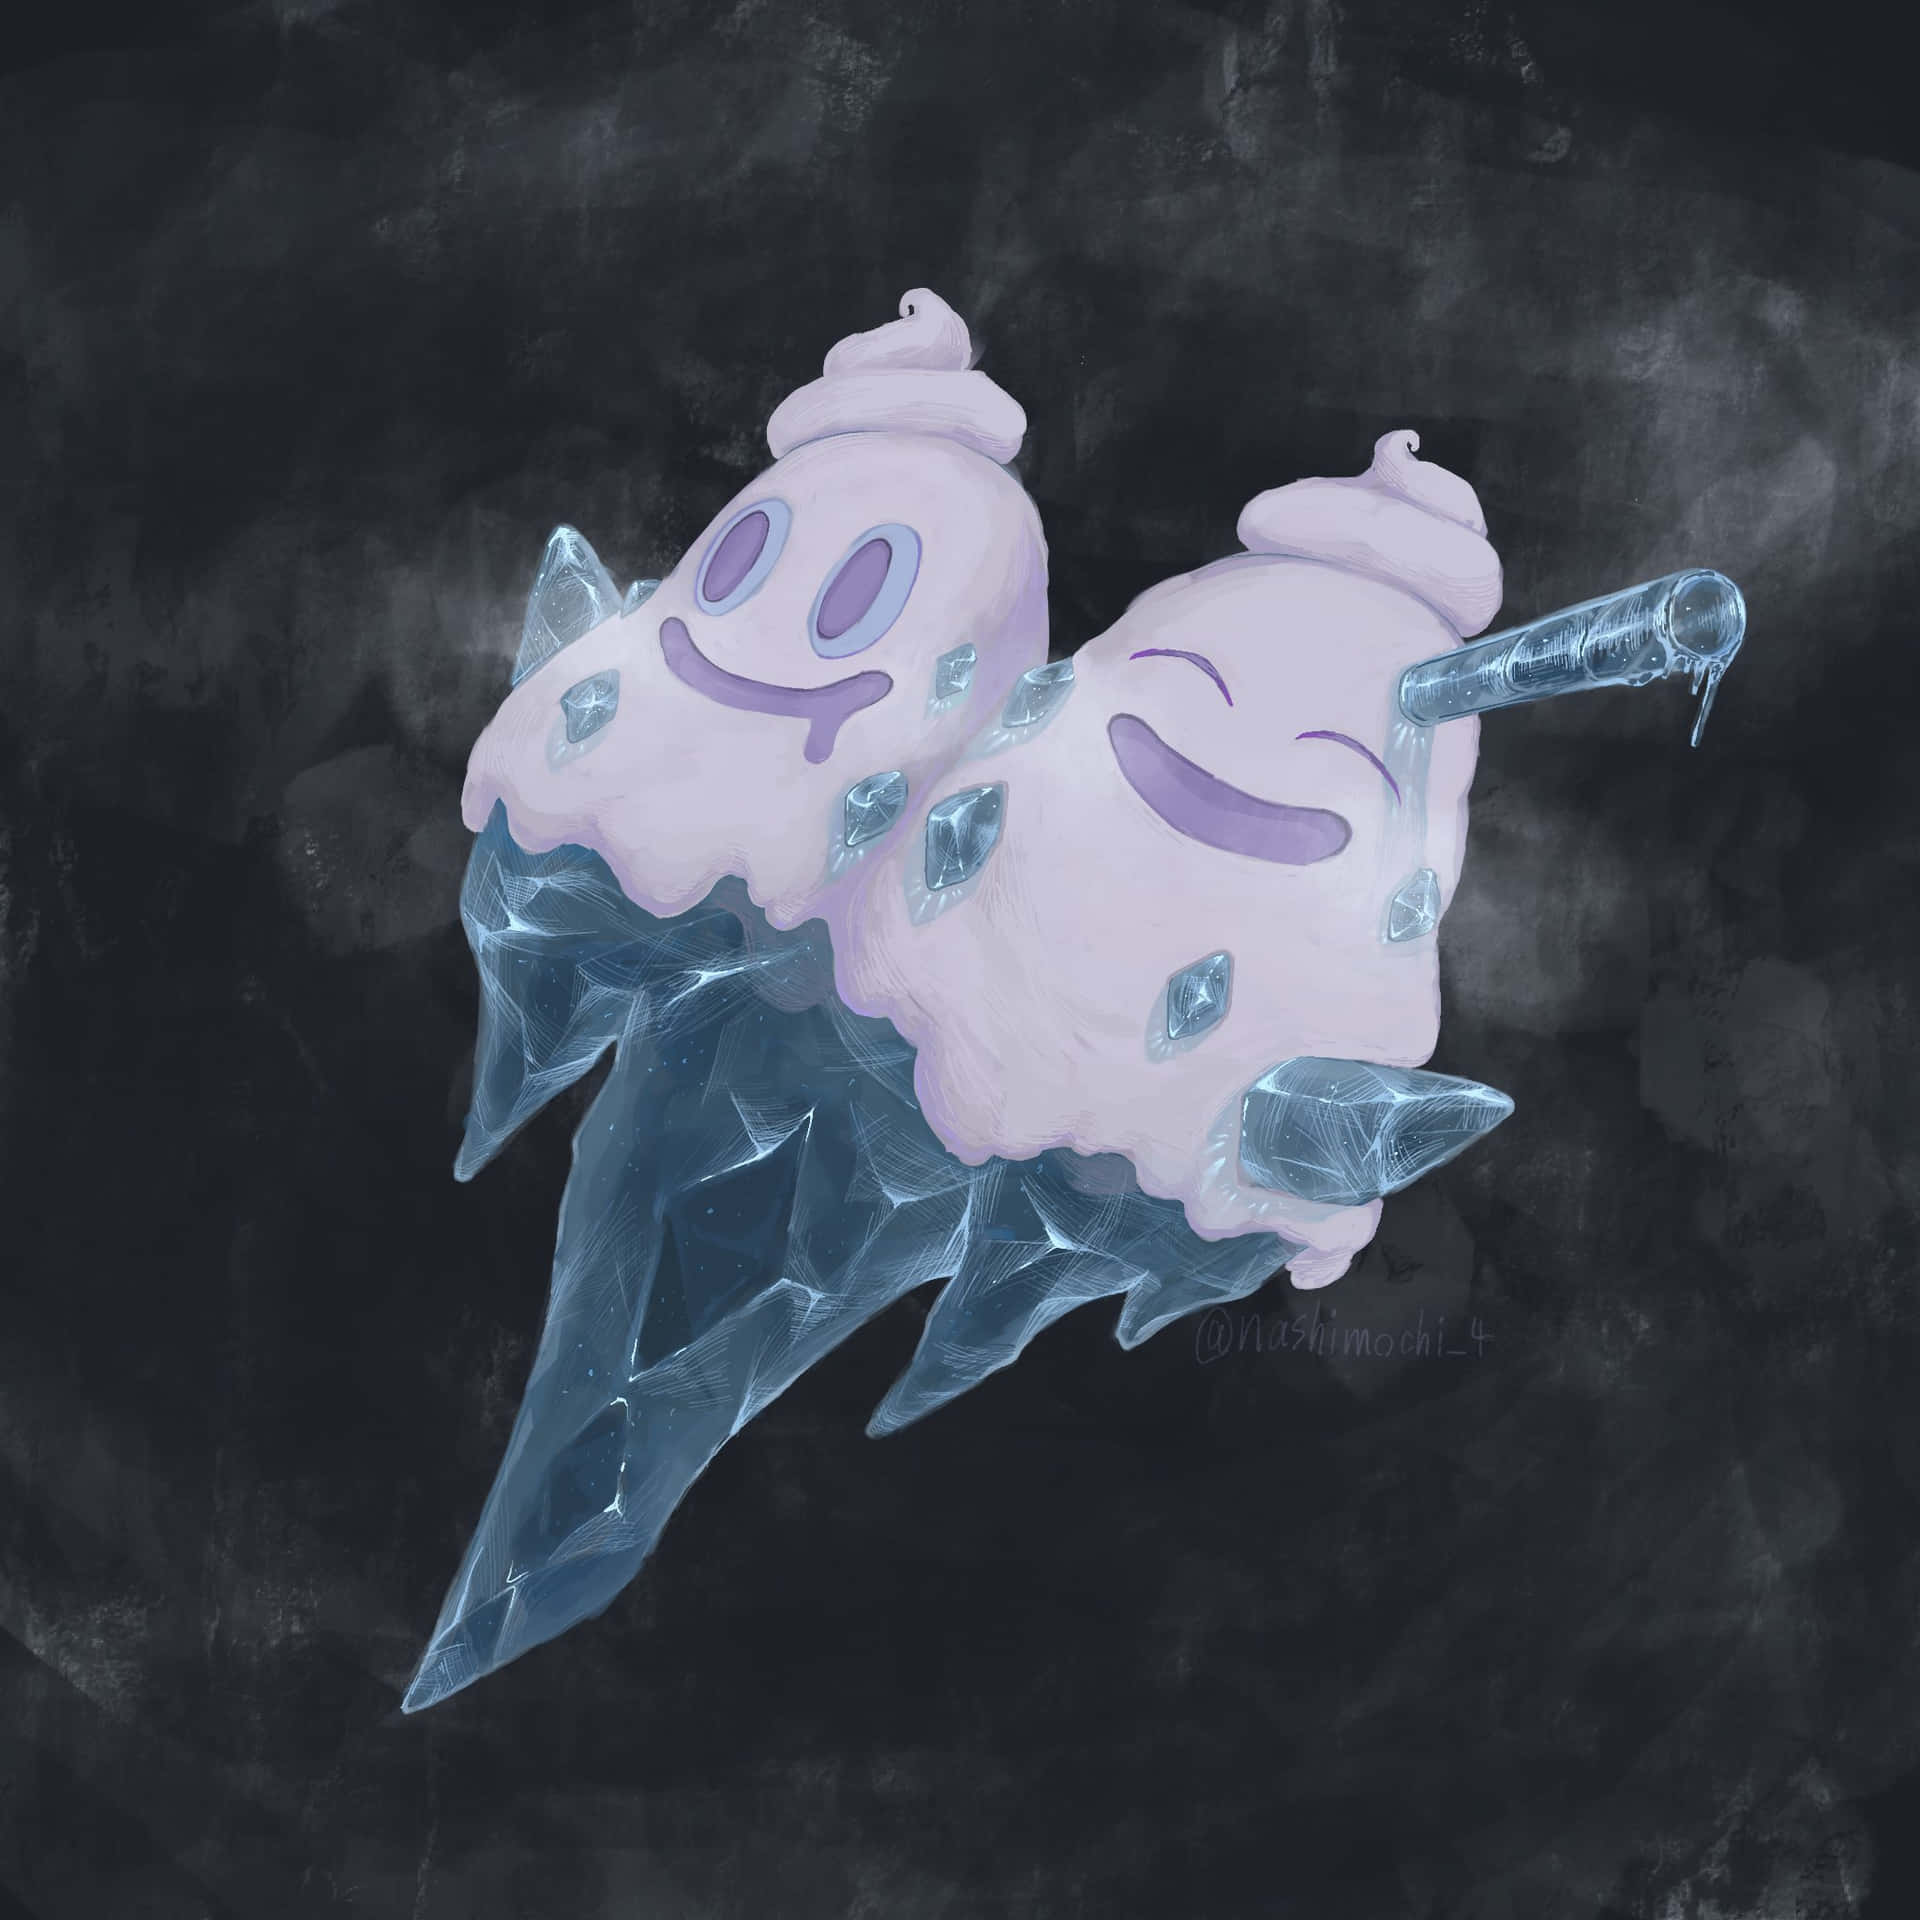 Vanilluxe From Pokemon Dark Artwork Wallpaper